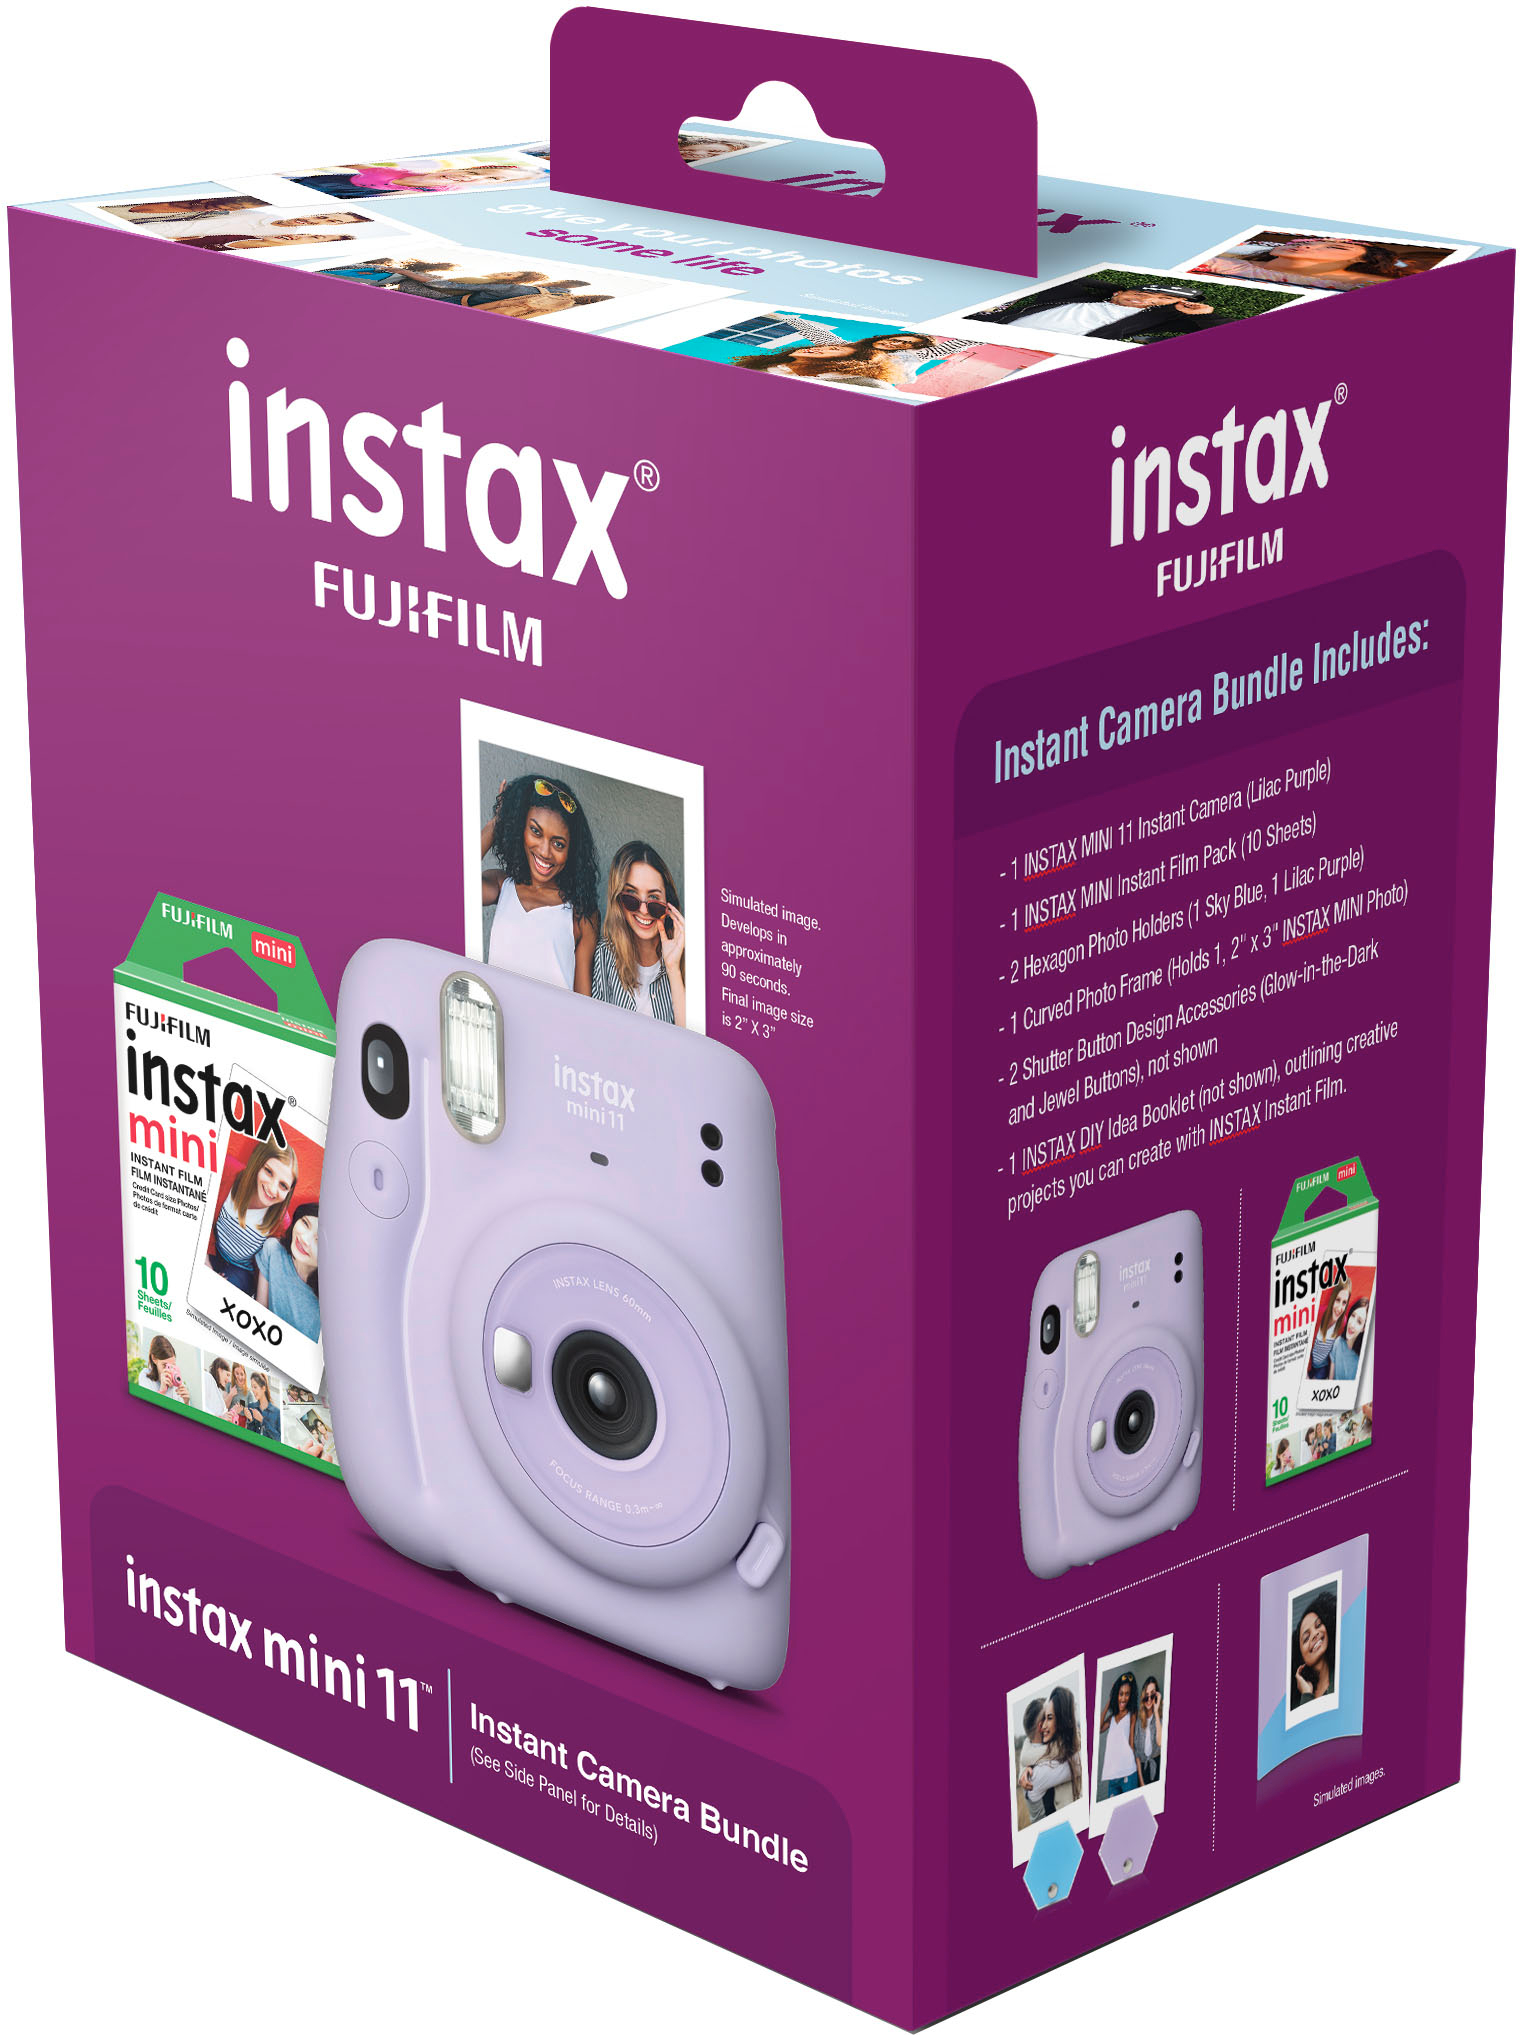 FUJIFILM INSTAX Mini 11 Instant Film Camera (Lilac Purple) Plus